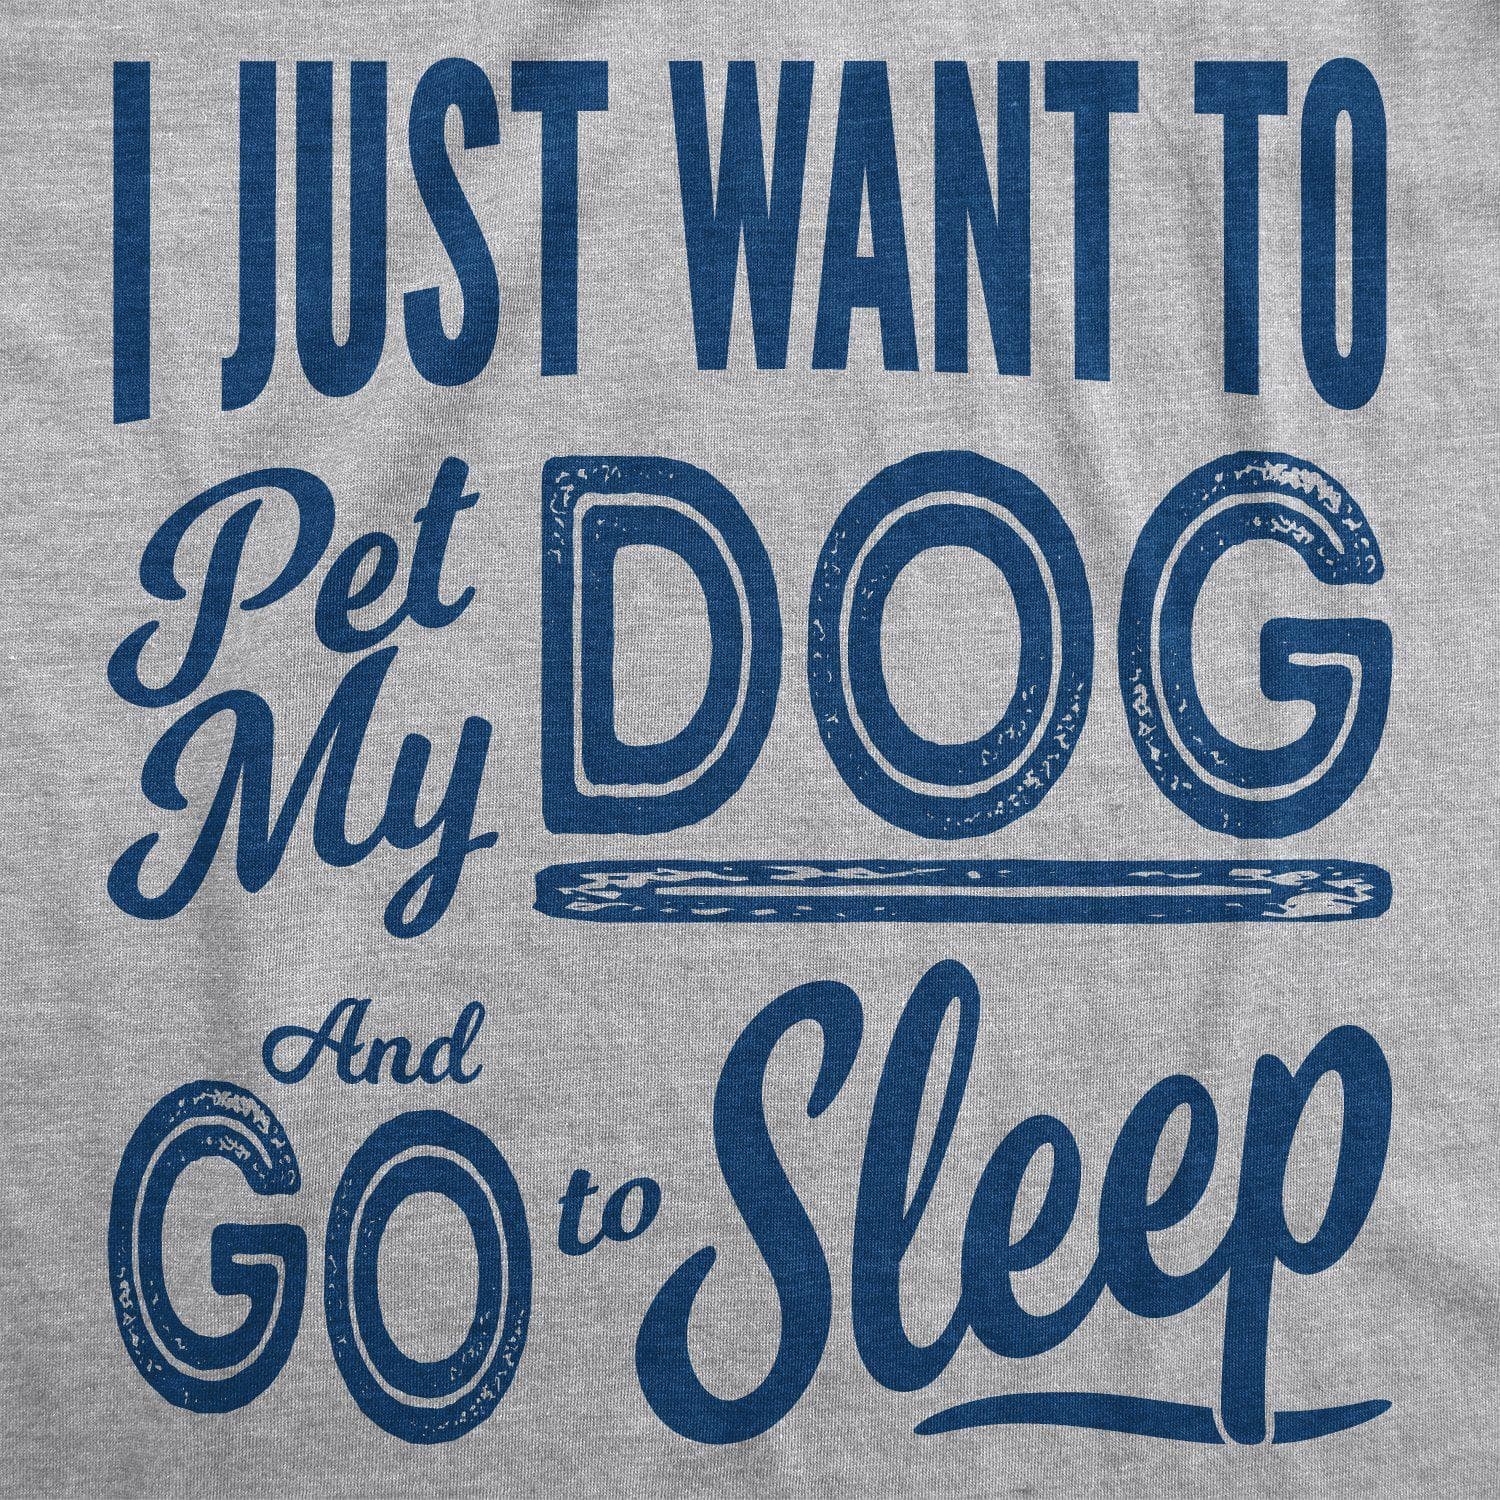 Pet My Dog and Go to Sleep Men's Tshirt - Crazy Dog T-Shirts